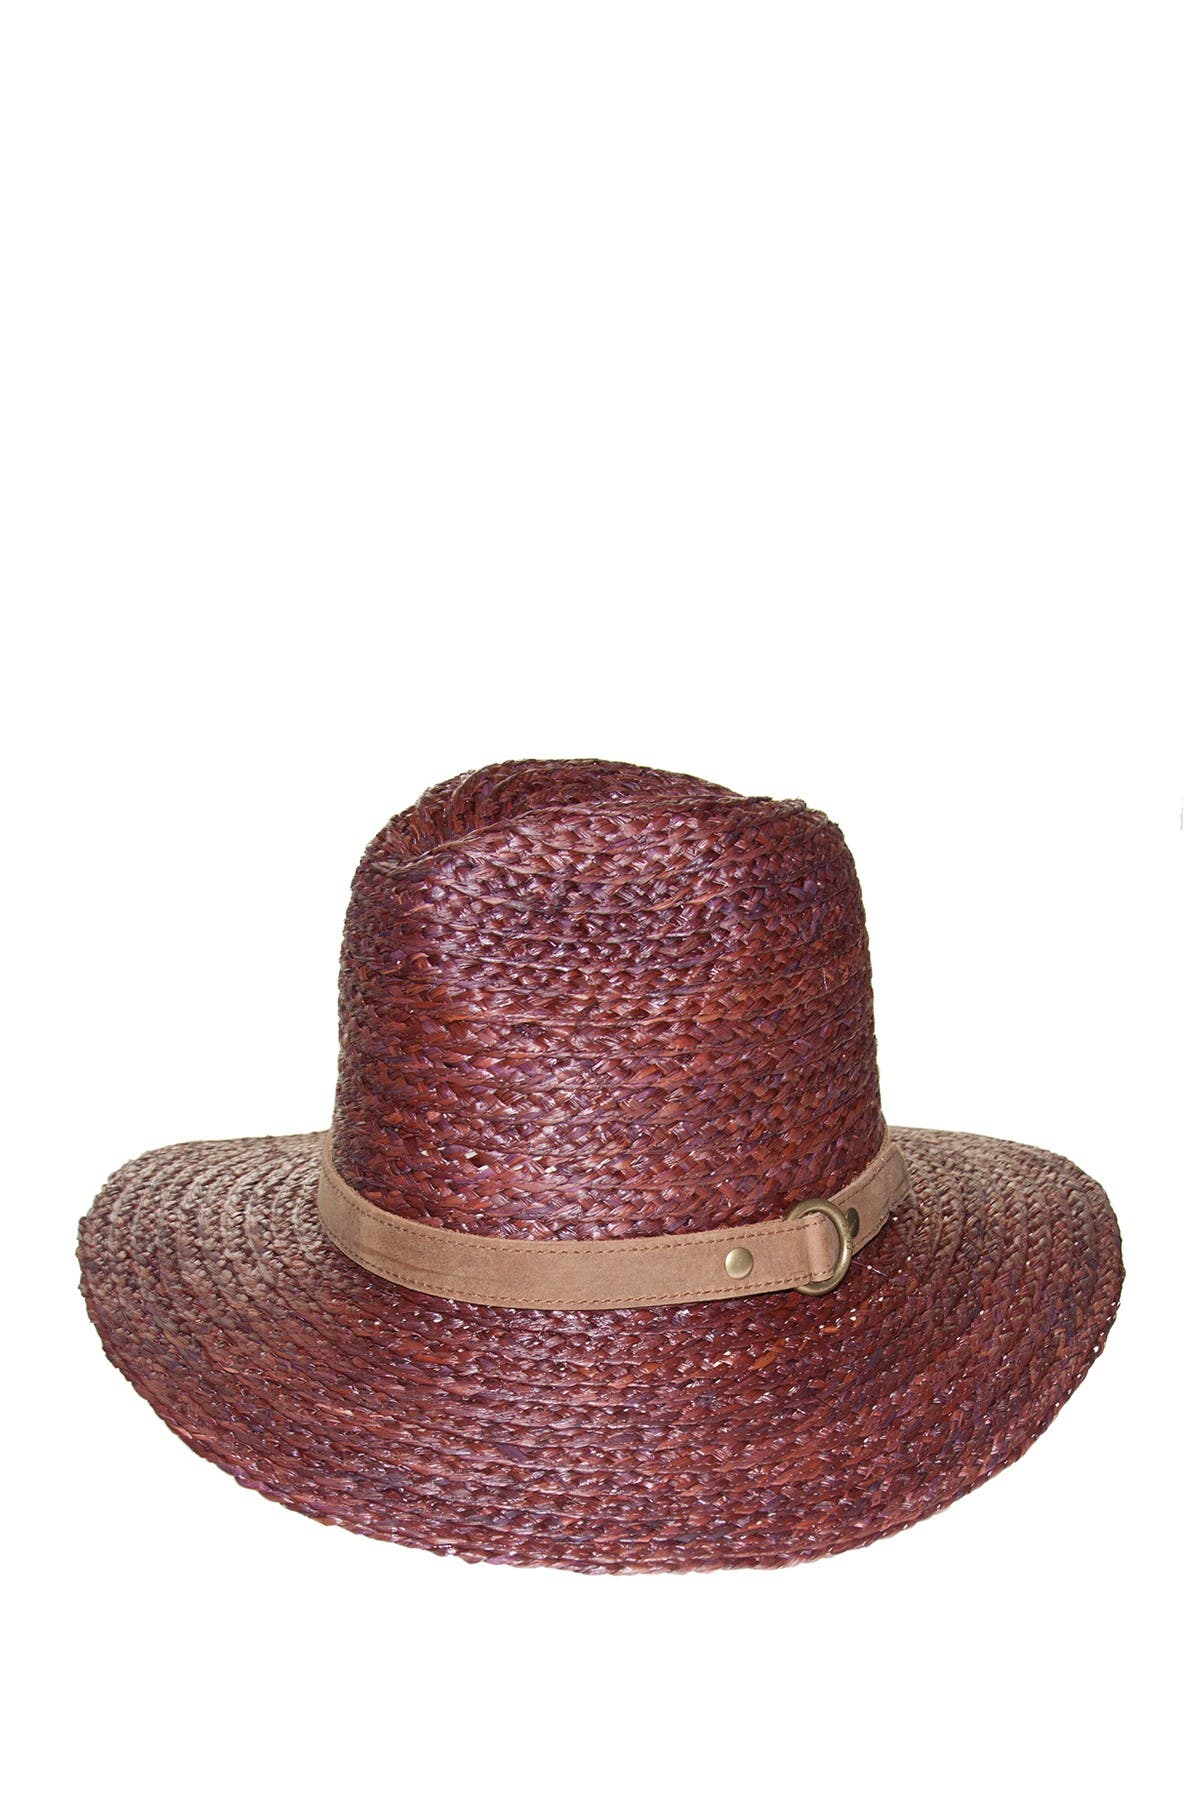 Frye Harness Leather Trimmed Raffia Fedora Hat In Brown